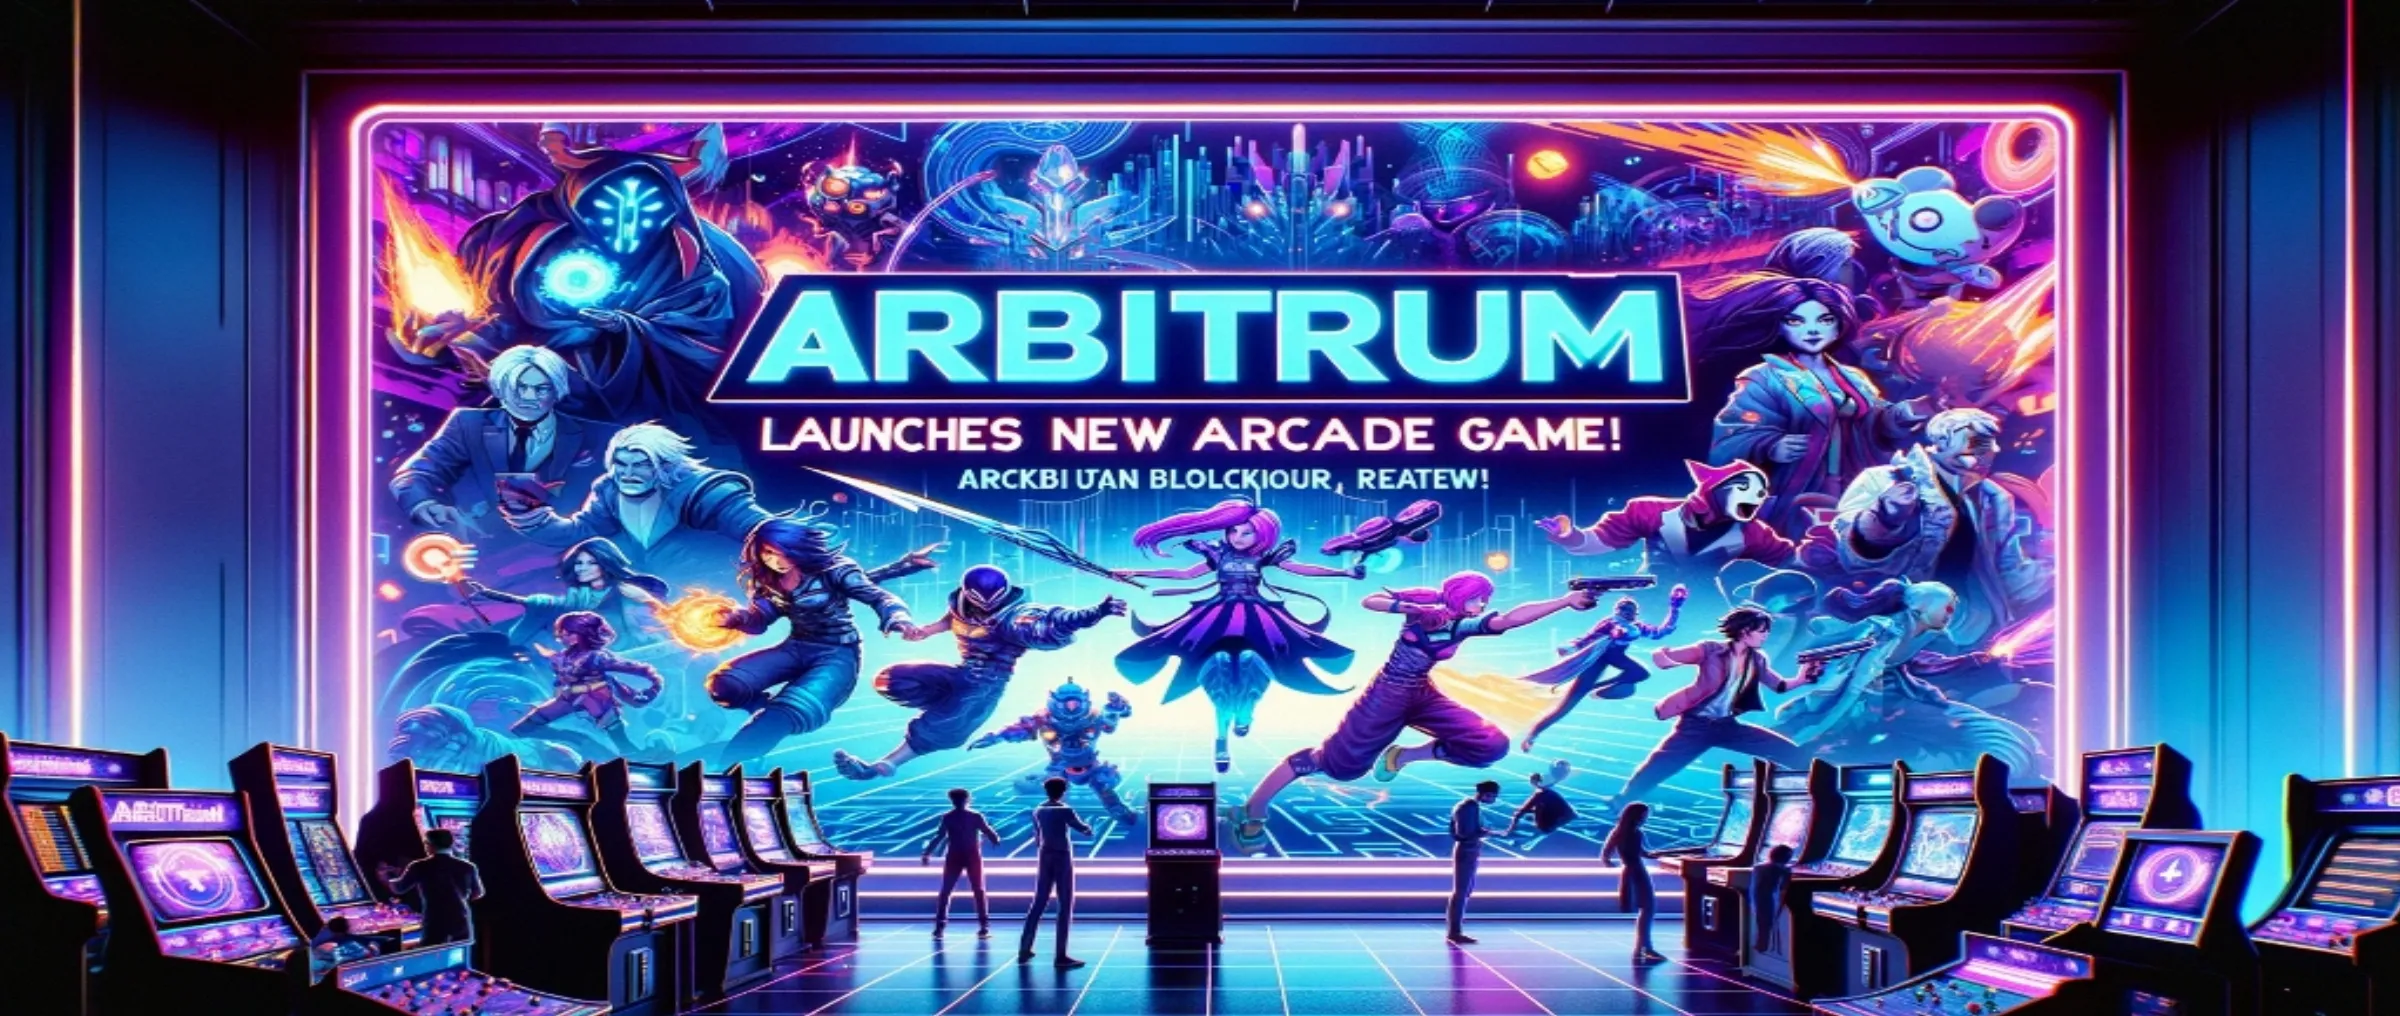 Arbitrum announces the release of an arcade game